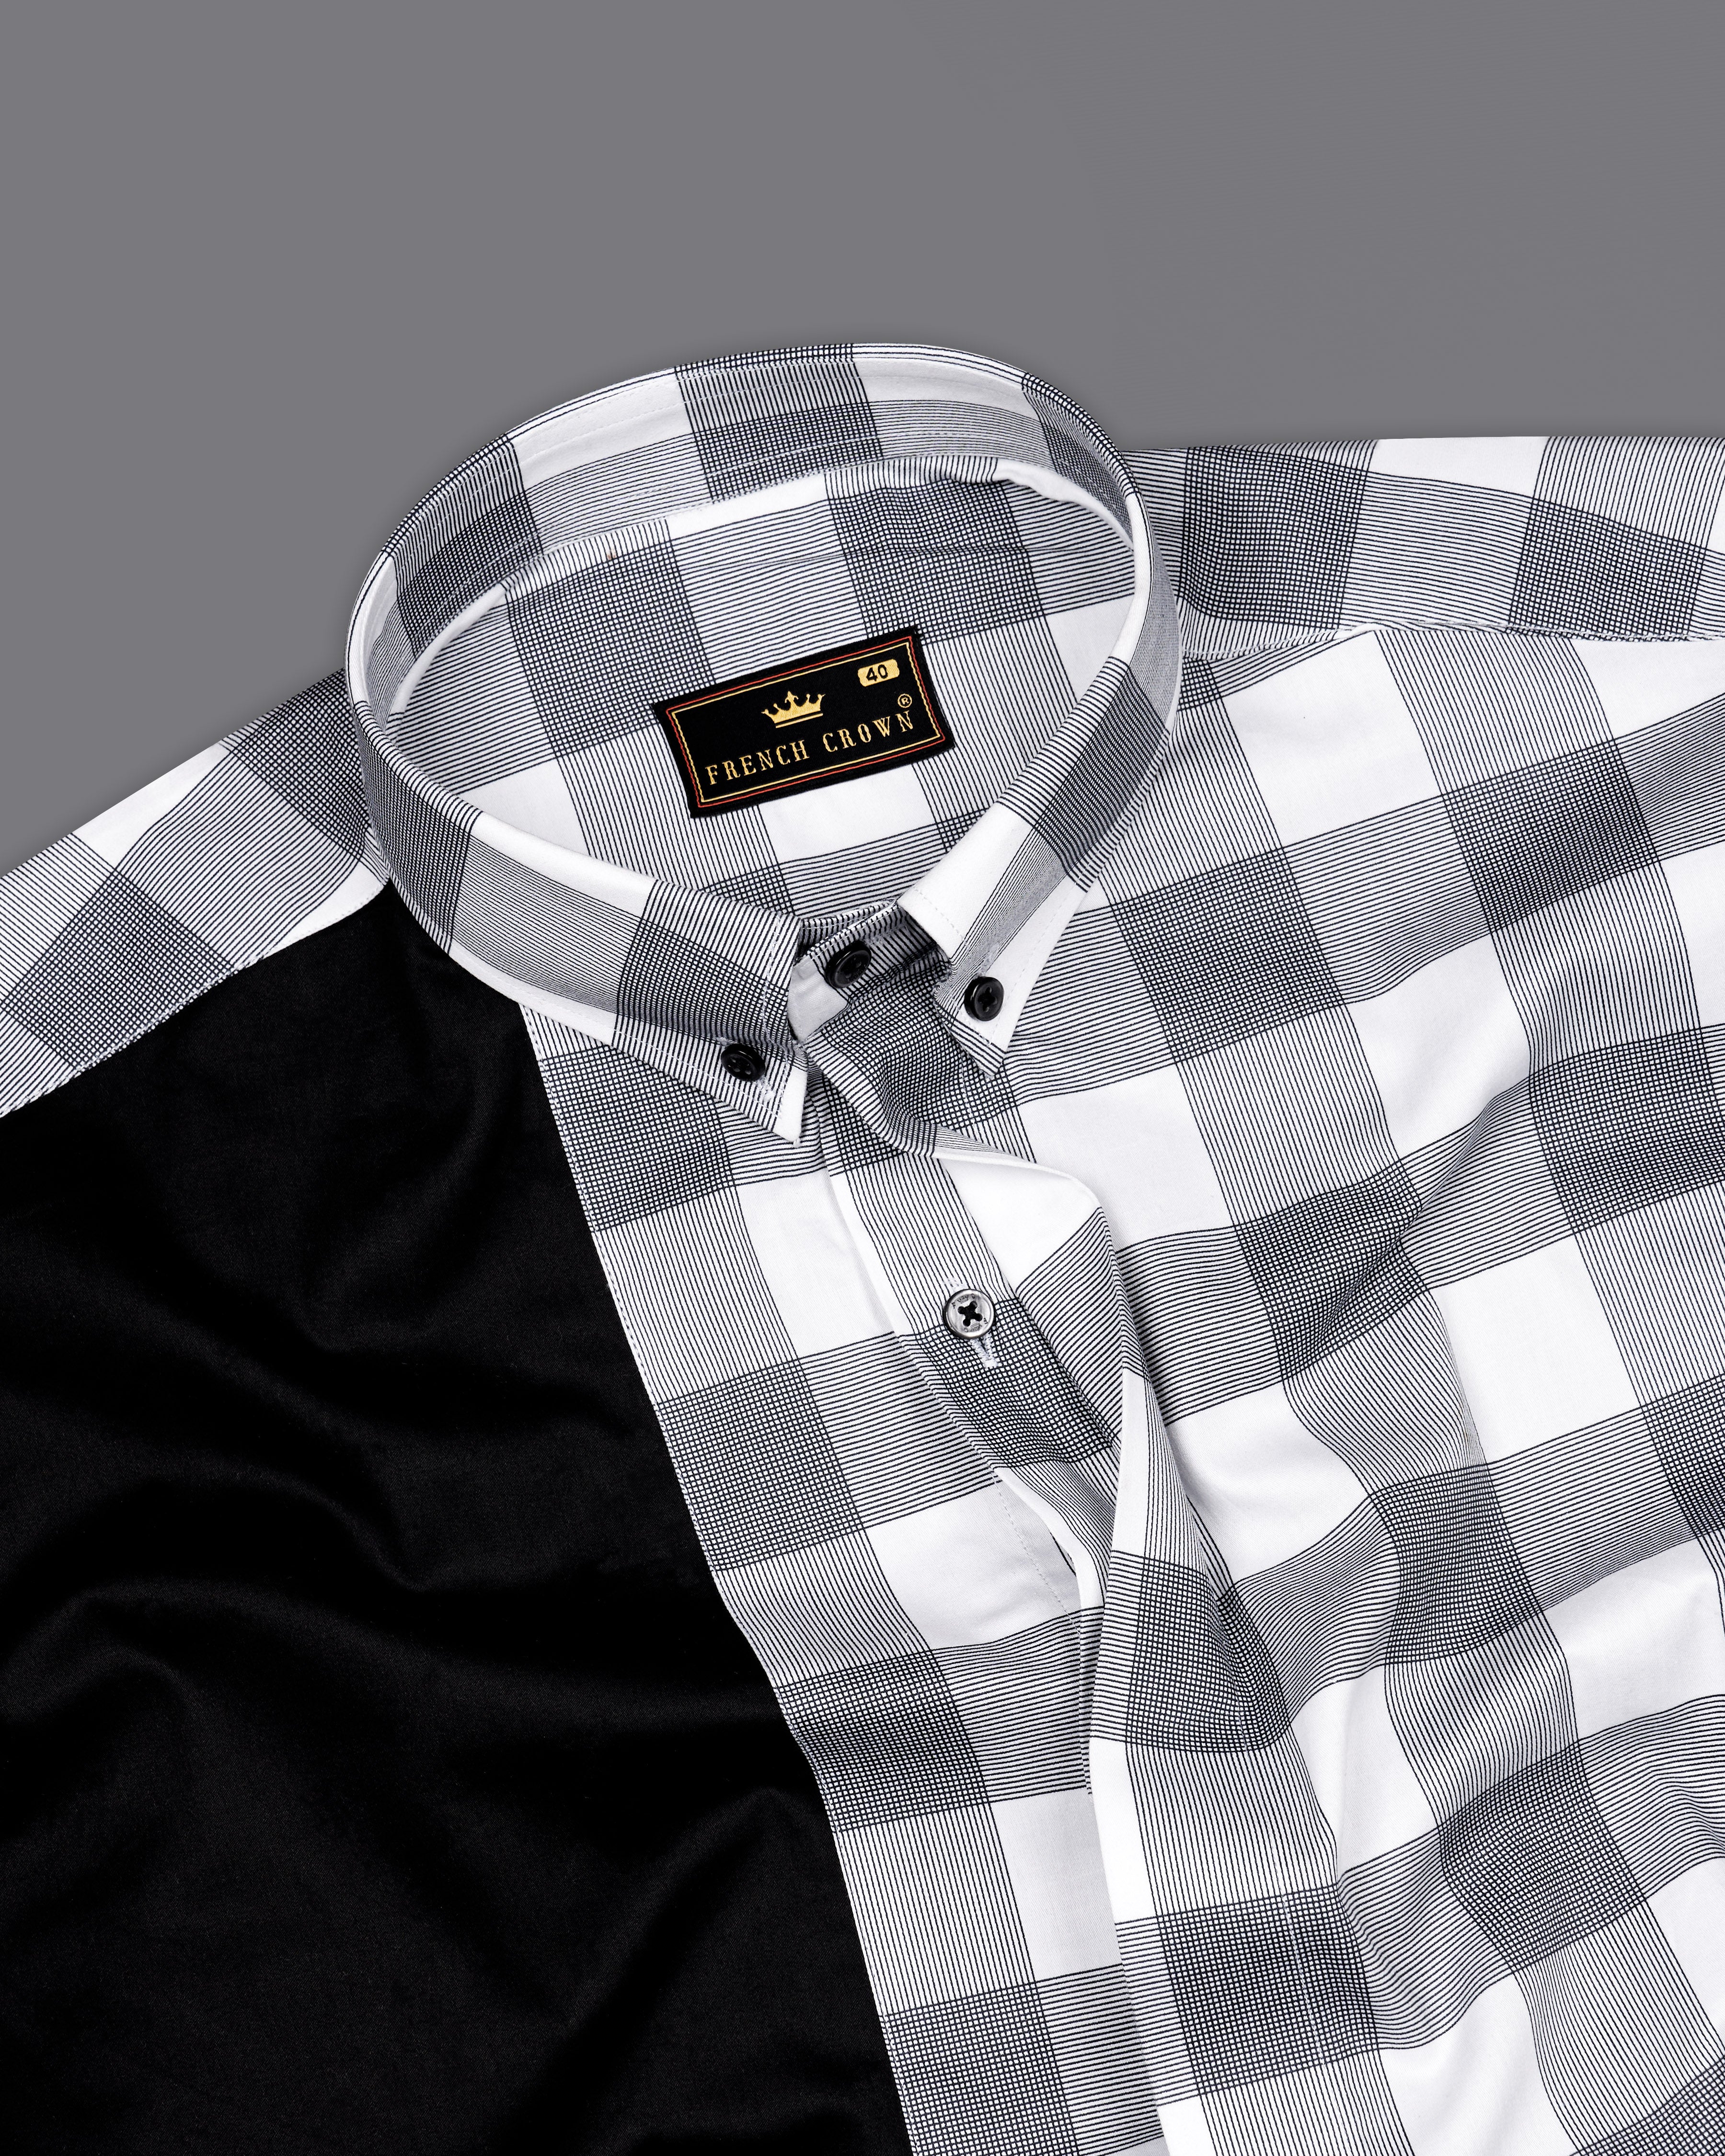 Jade Black with Bright White Checkered Super Soft Premium Cotton Designer Shirt 9766-BD-BLK-P445-38, 9766-BD-BLK-P445-H-38, 9766-BD-BLK-P445-39, 9766-BD-BLK-P445-H-39, 9766-BD-BLK-P445-40, 9766-BD-BLK-P445-H-40, 9766-BD-BLK-P445-42, 9766-BD-BLK-P445-H-42, 9766-BD-BLK-P445-44, 9766-BD-BLK-P445-H-44, 9766-BD-BLK-P445-46, 9766-BD-BLK-P445-H-46, 9766-BD-BLK-P445-48, 9766-BD-BLK-P445-H-48, 9766-BD-BLK-P445-50, 9766-BD-BLK-P445-H-50, 9766-BD-BLK-P445-52, 9766-BD-BLK-P445-H-52